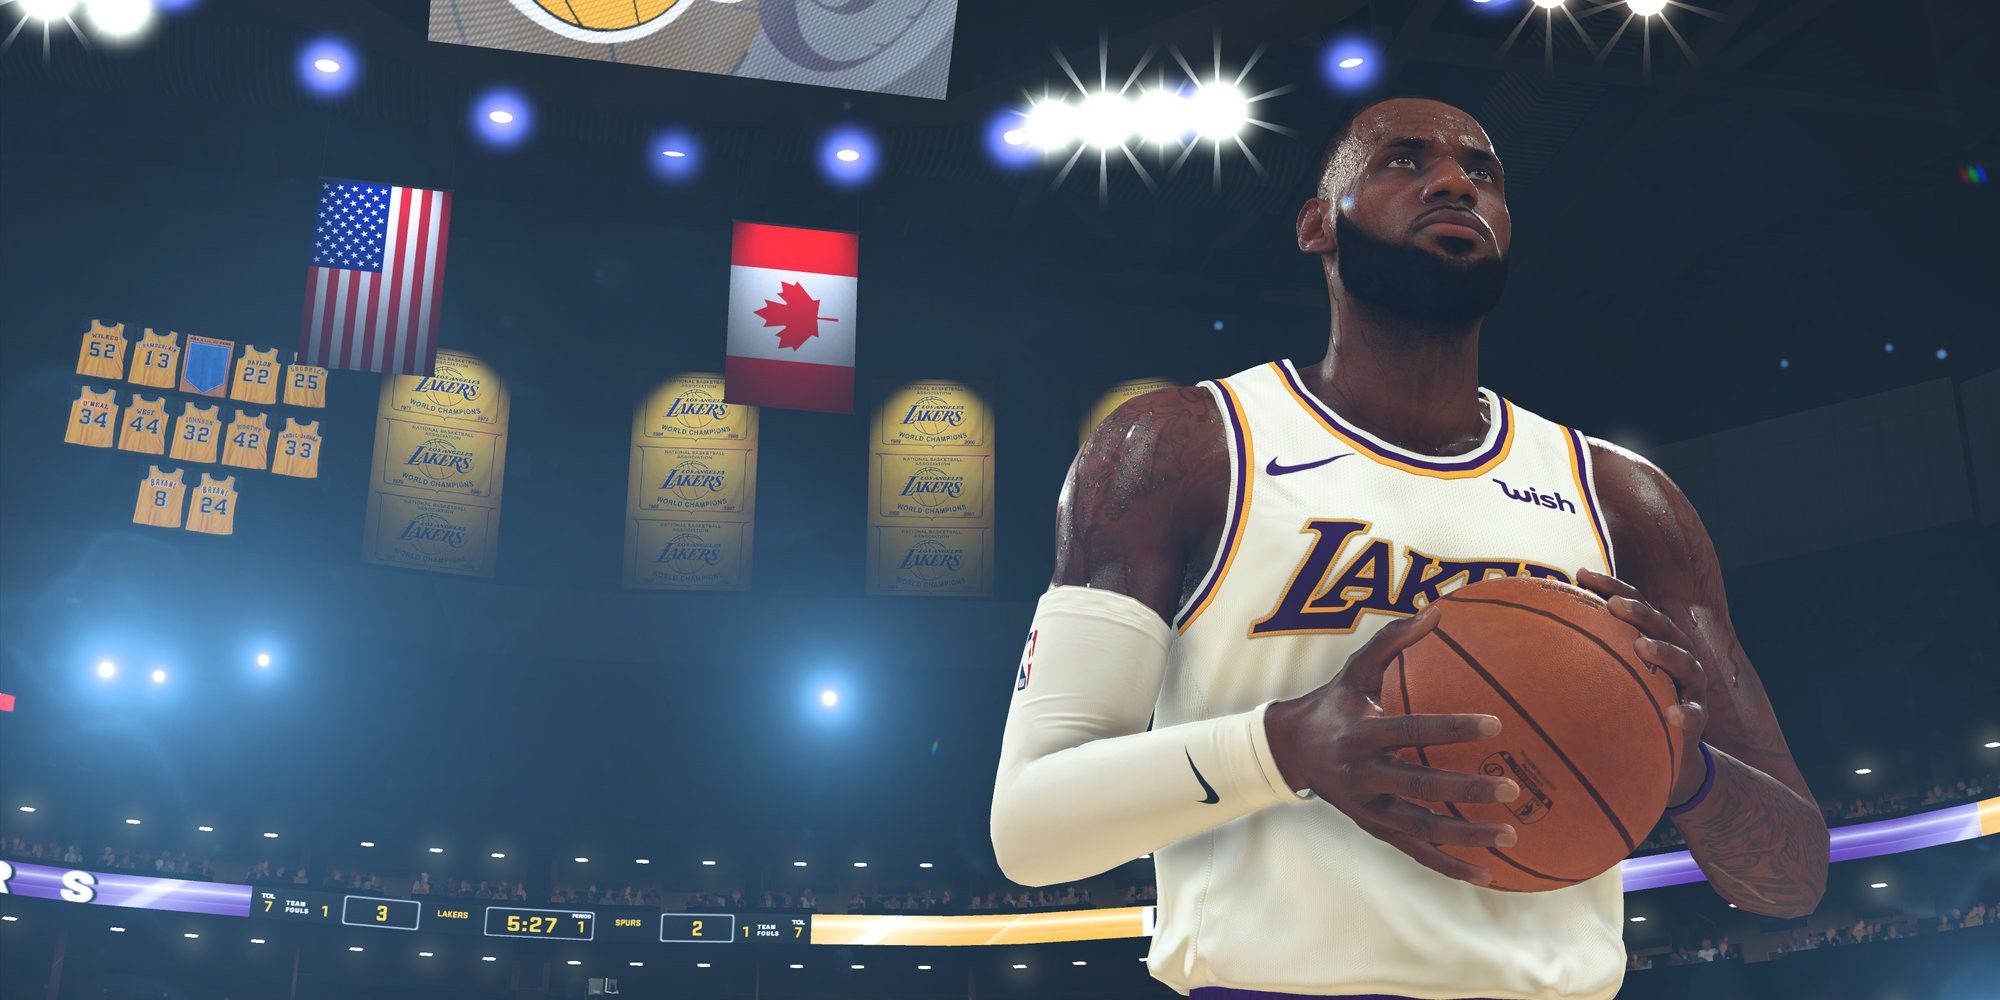 NBA 2K Lebron James on Lakers court